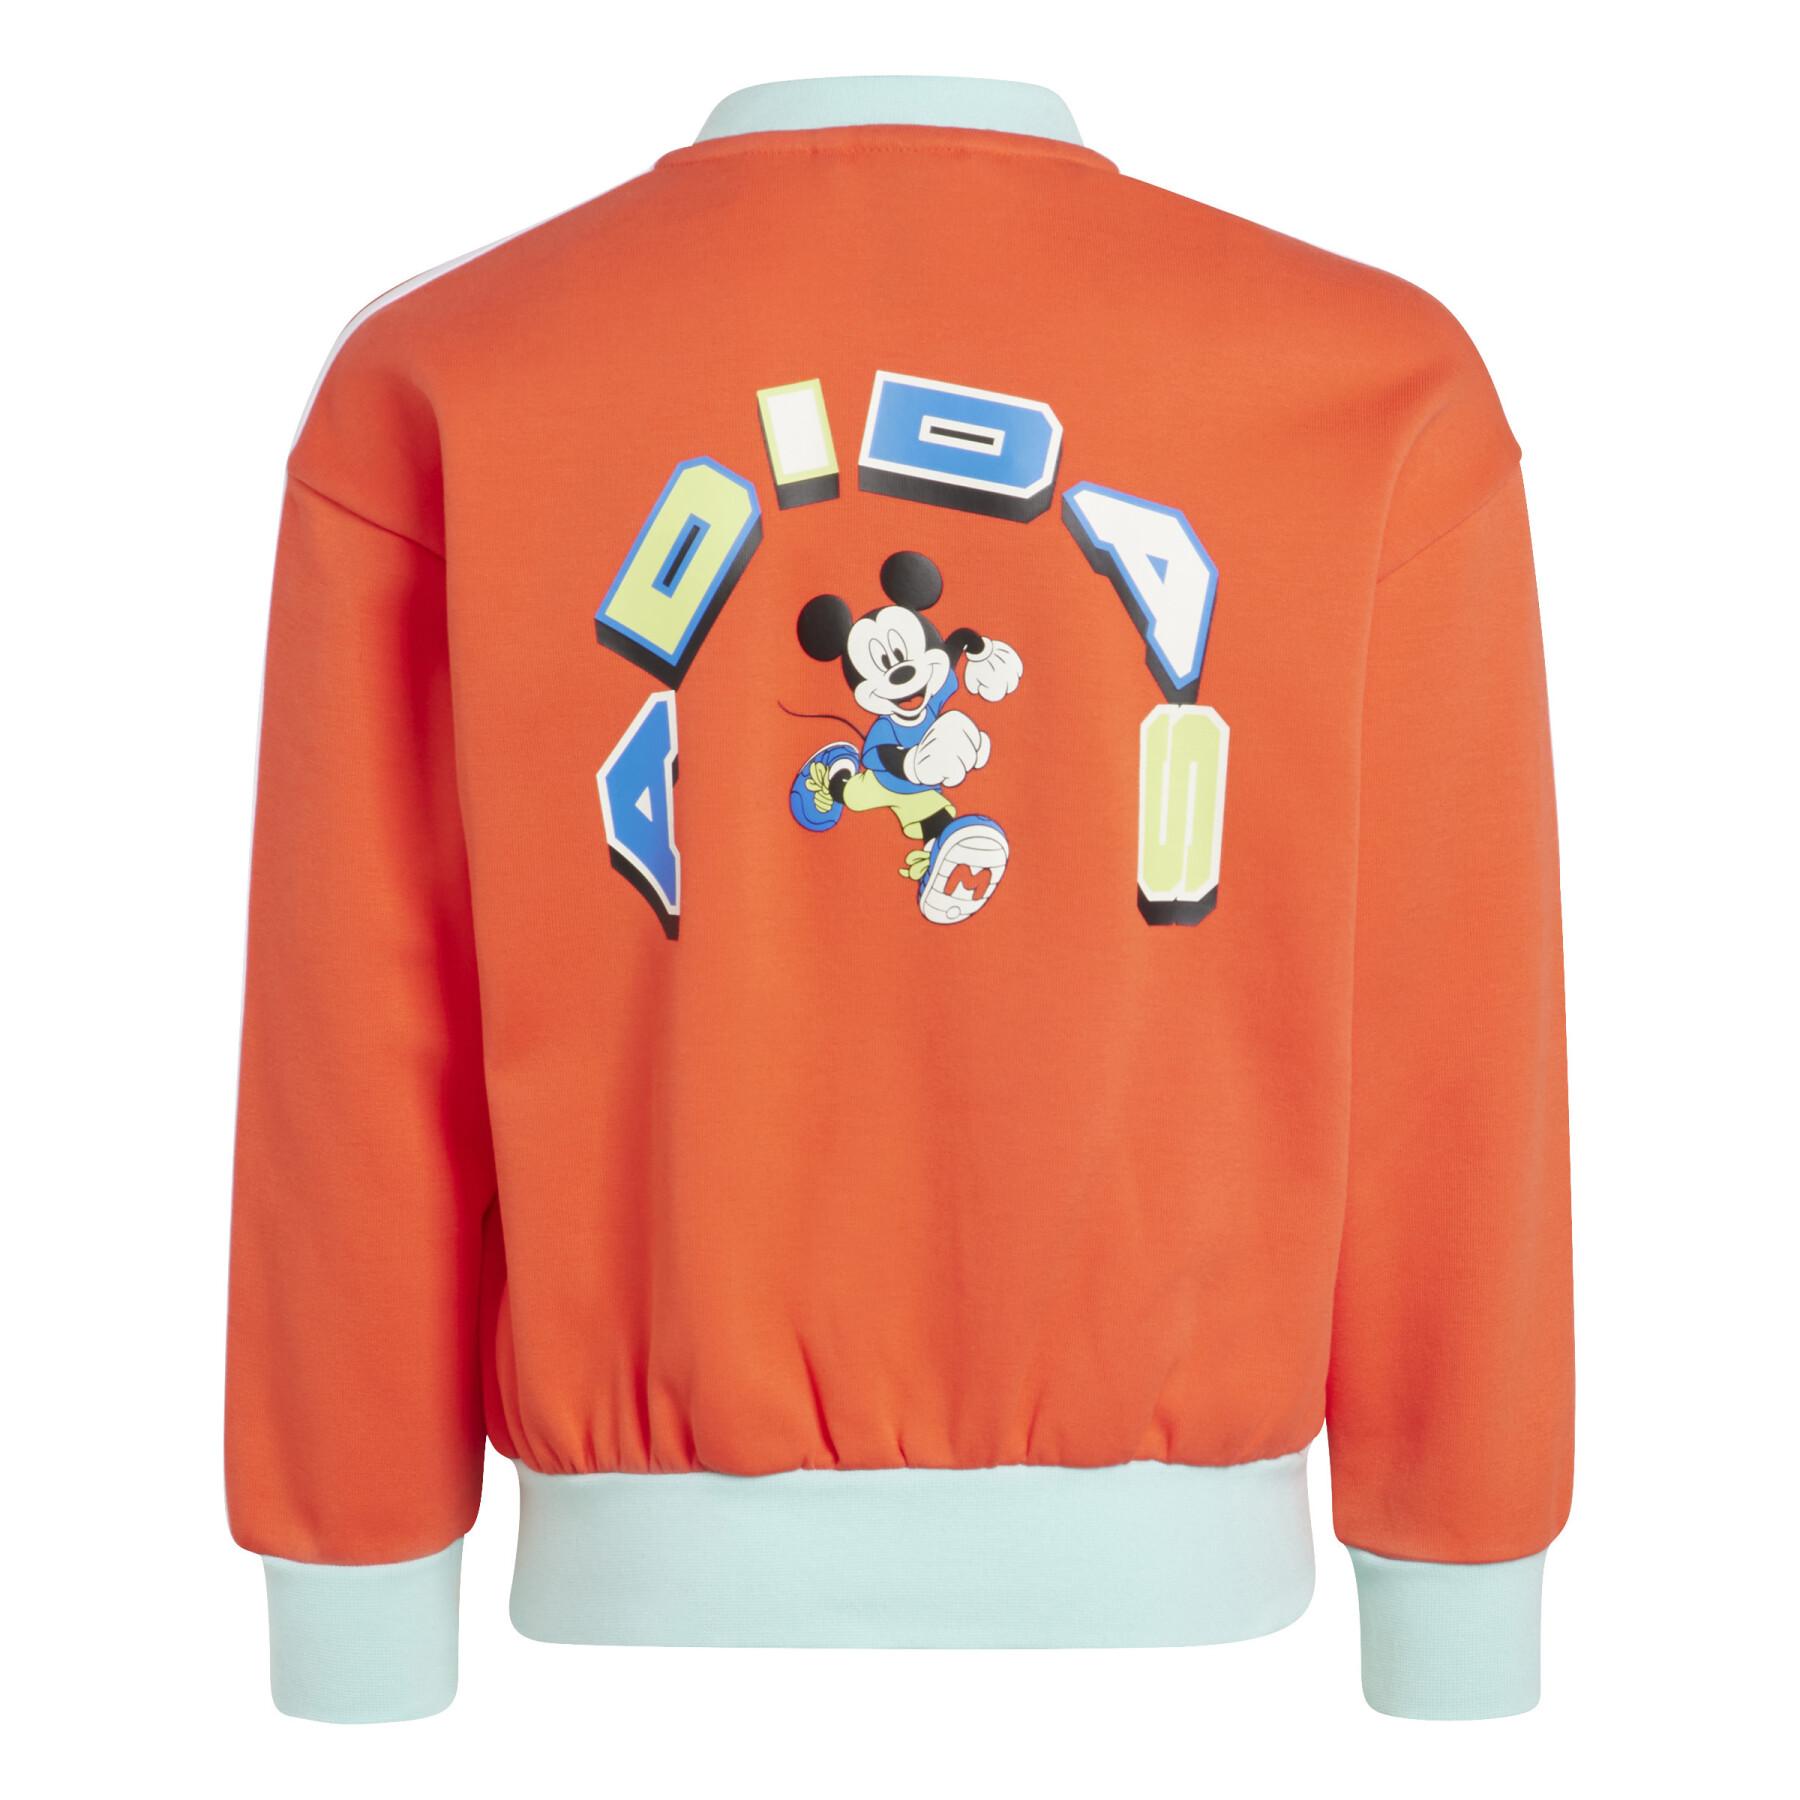 Baby jacket adidas X Disney Mickey Mouse